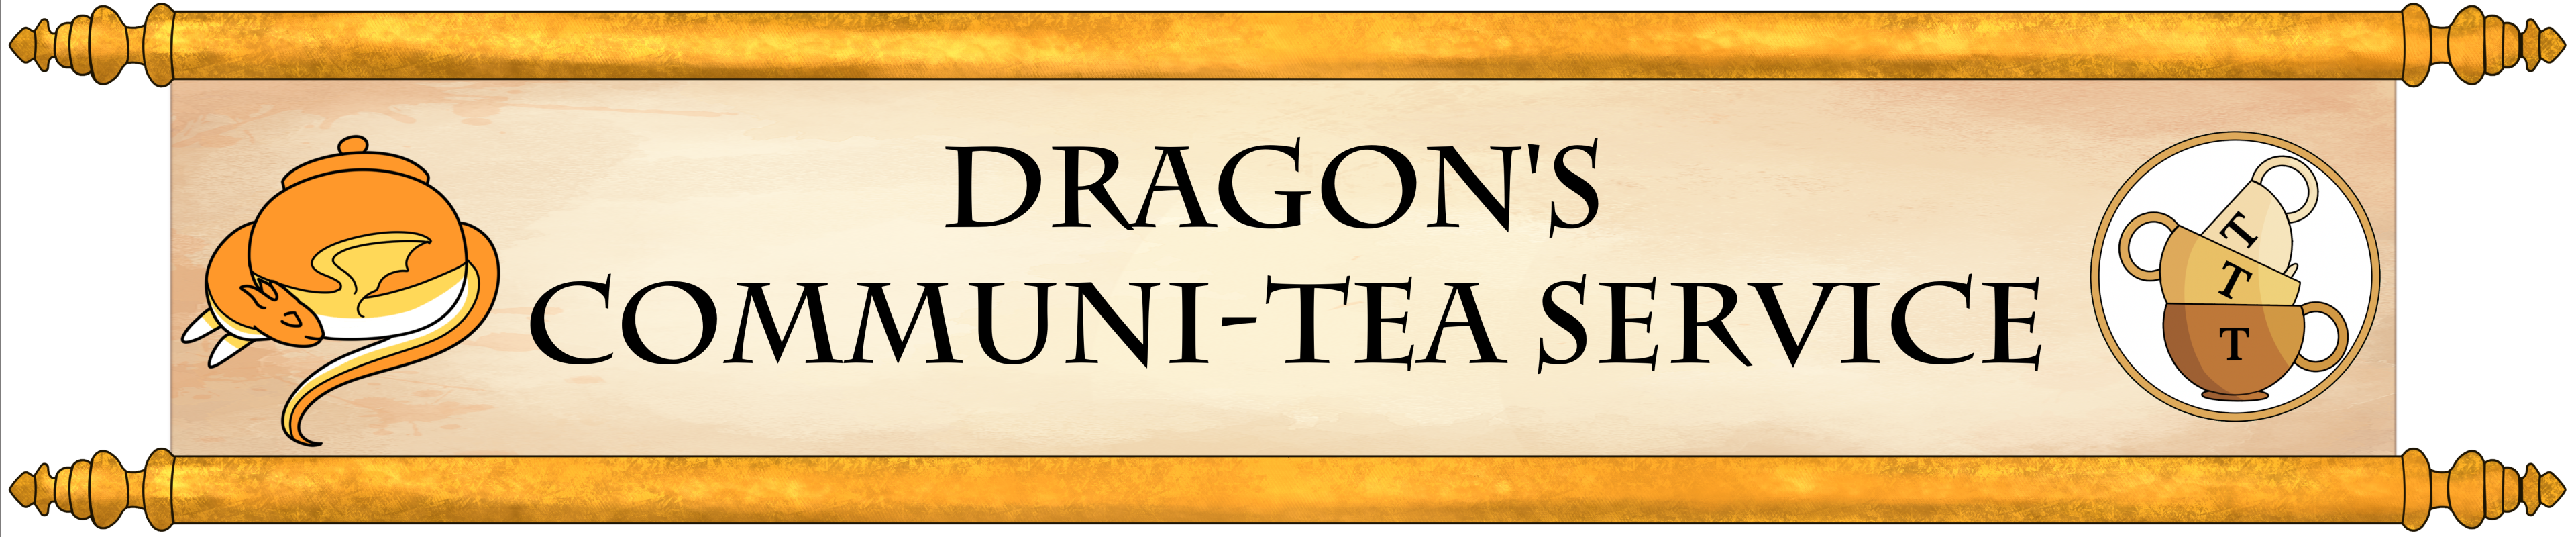 Dragon's Communi-Tea Service